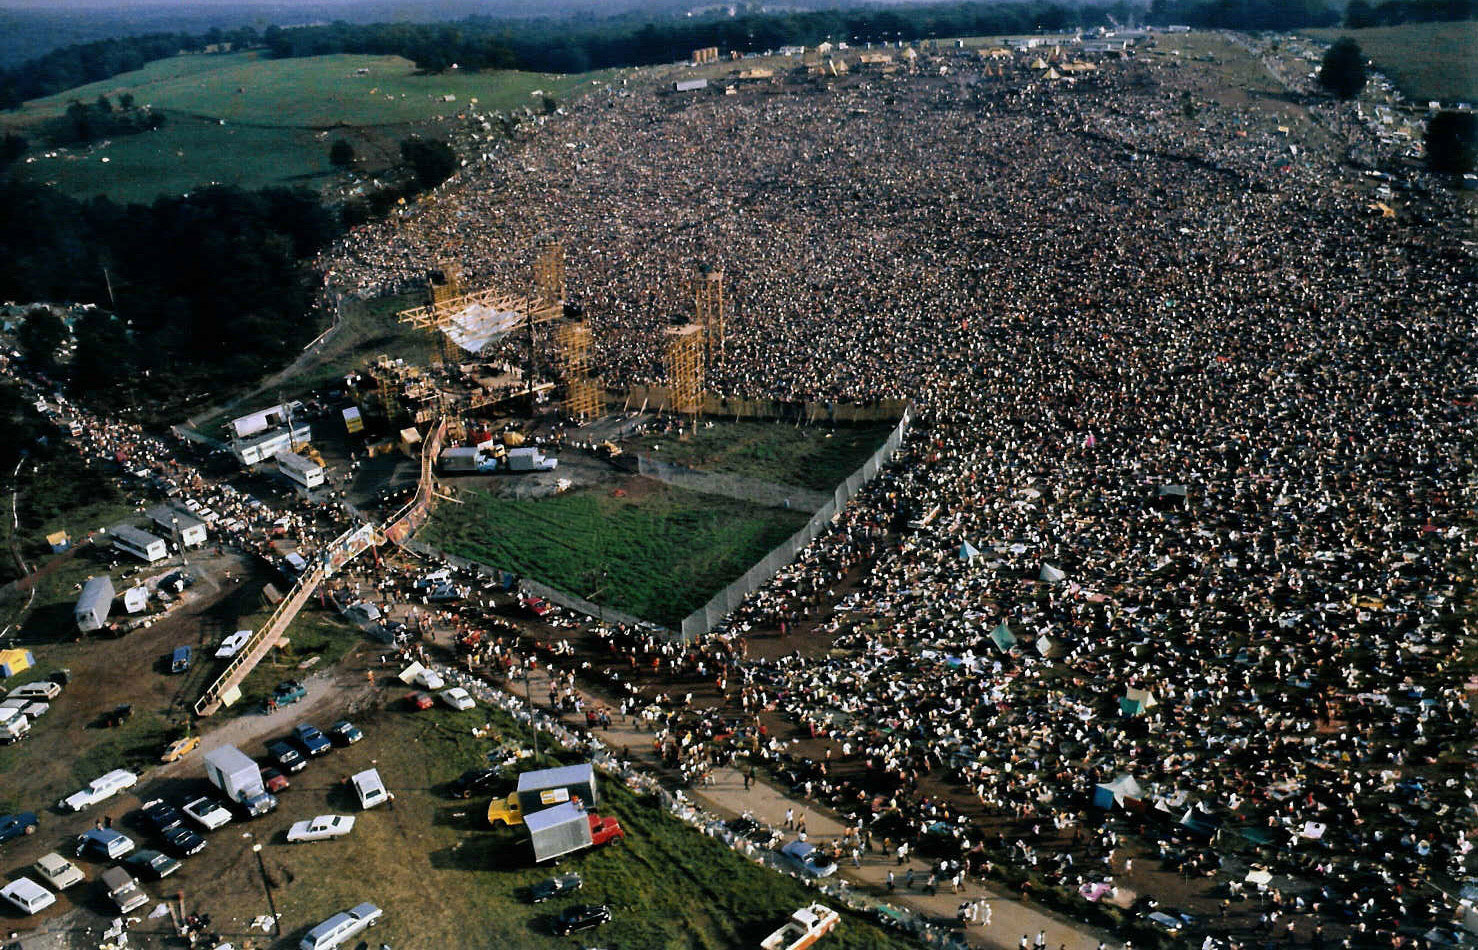 Woodstock Music and Art Festival opens